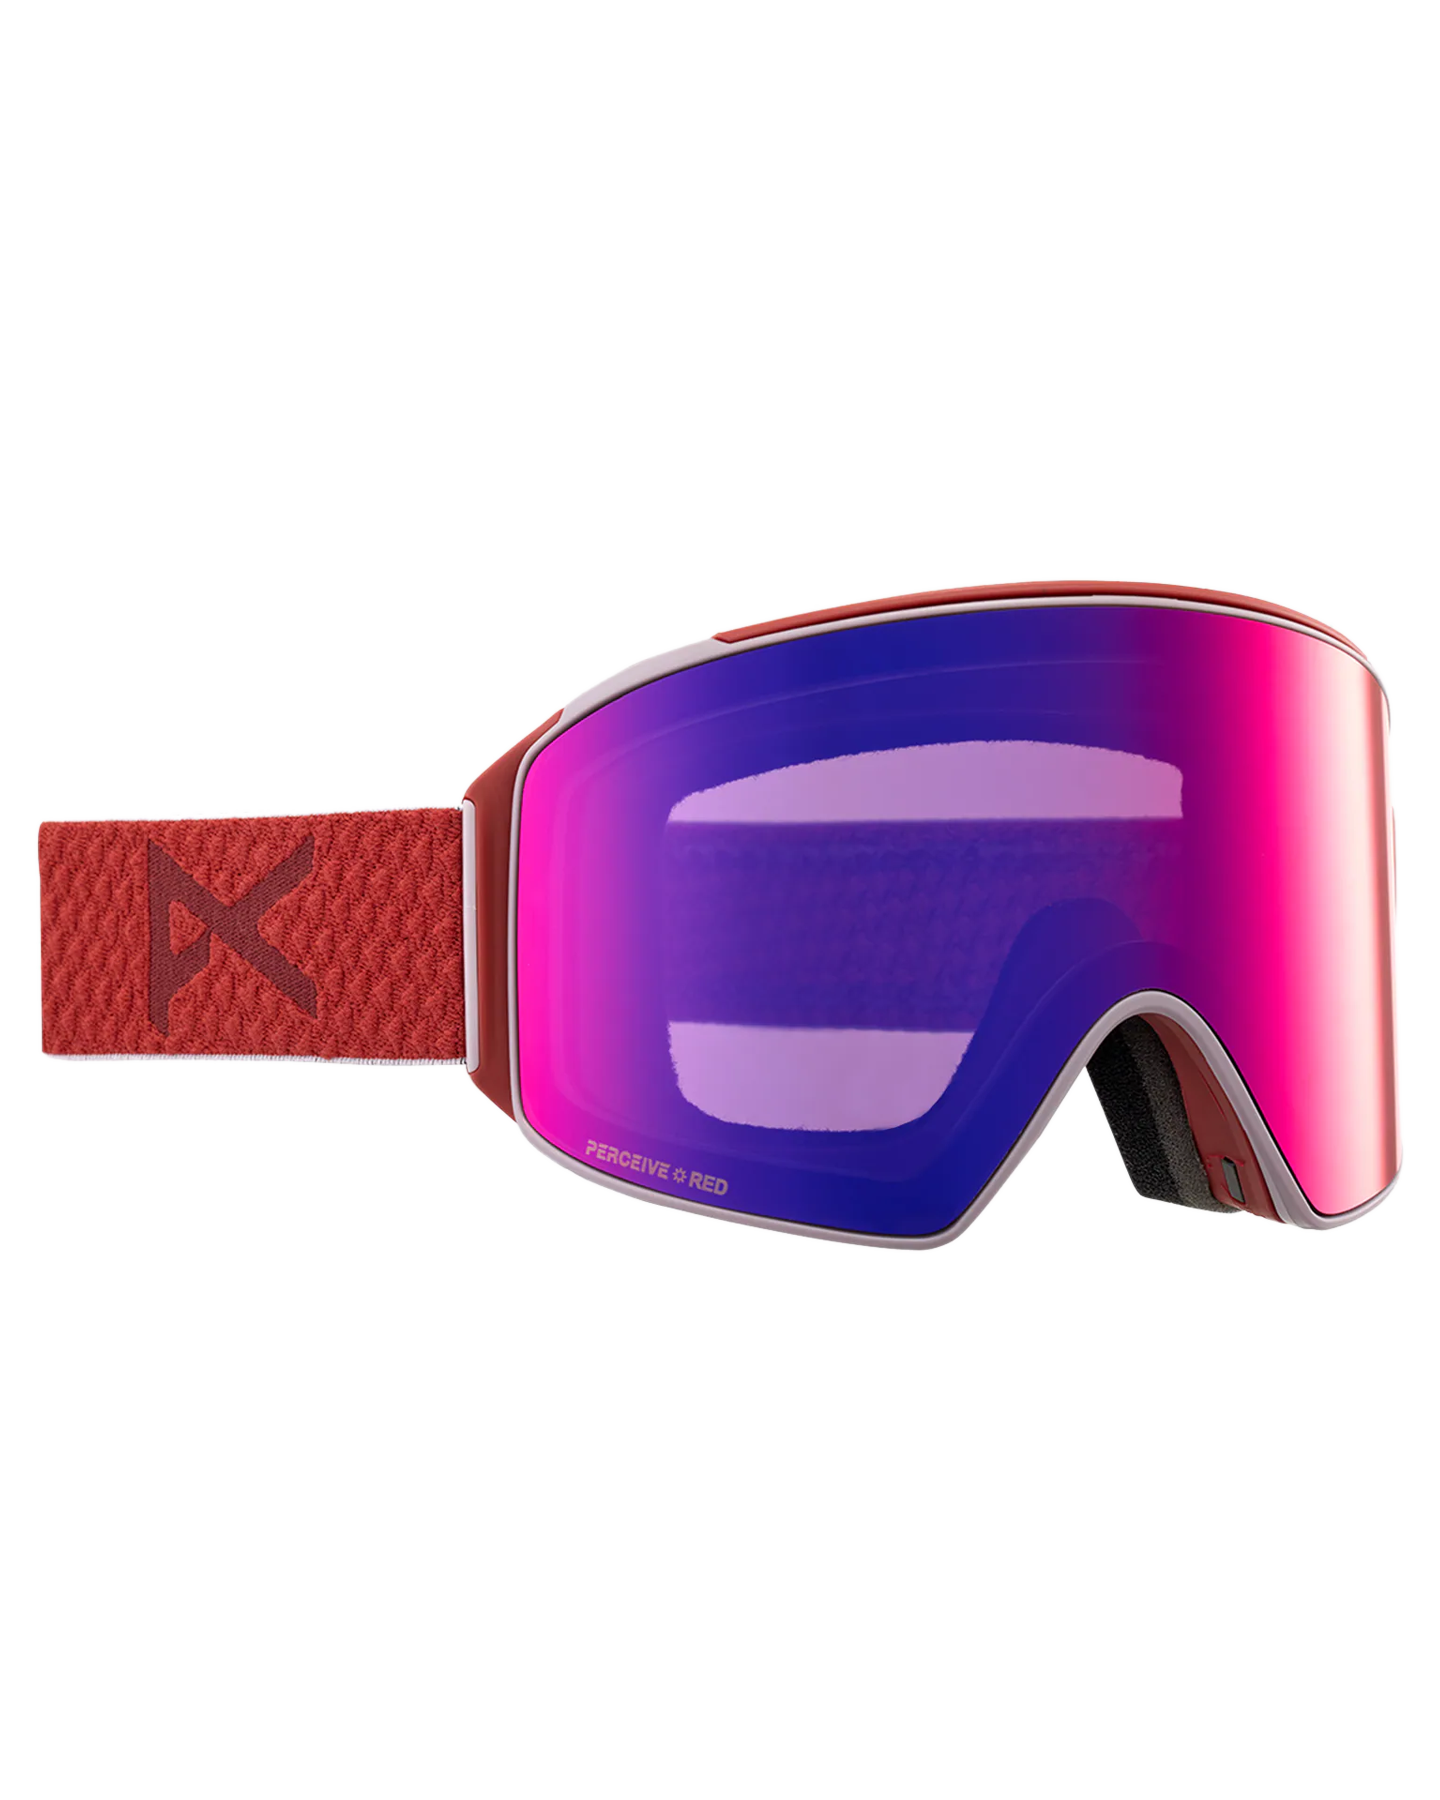 Anon M4 Cylindrical Snow Goggles + Bonus Lens + Mfi® Face Mask - Mars/Perceive Sunny Red Lens Men's Snow Goggles - Trojan Wake Ski Snow